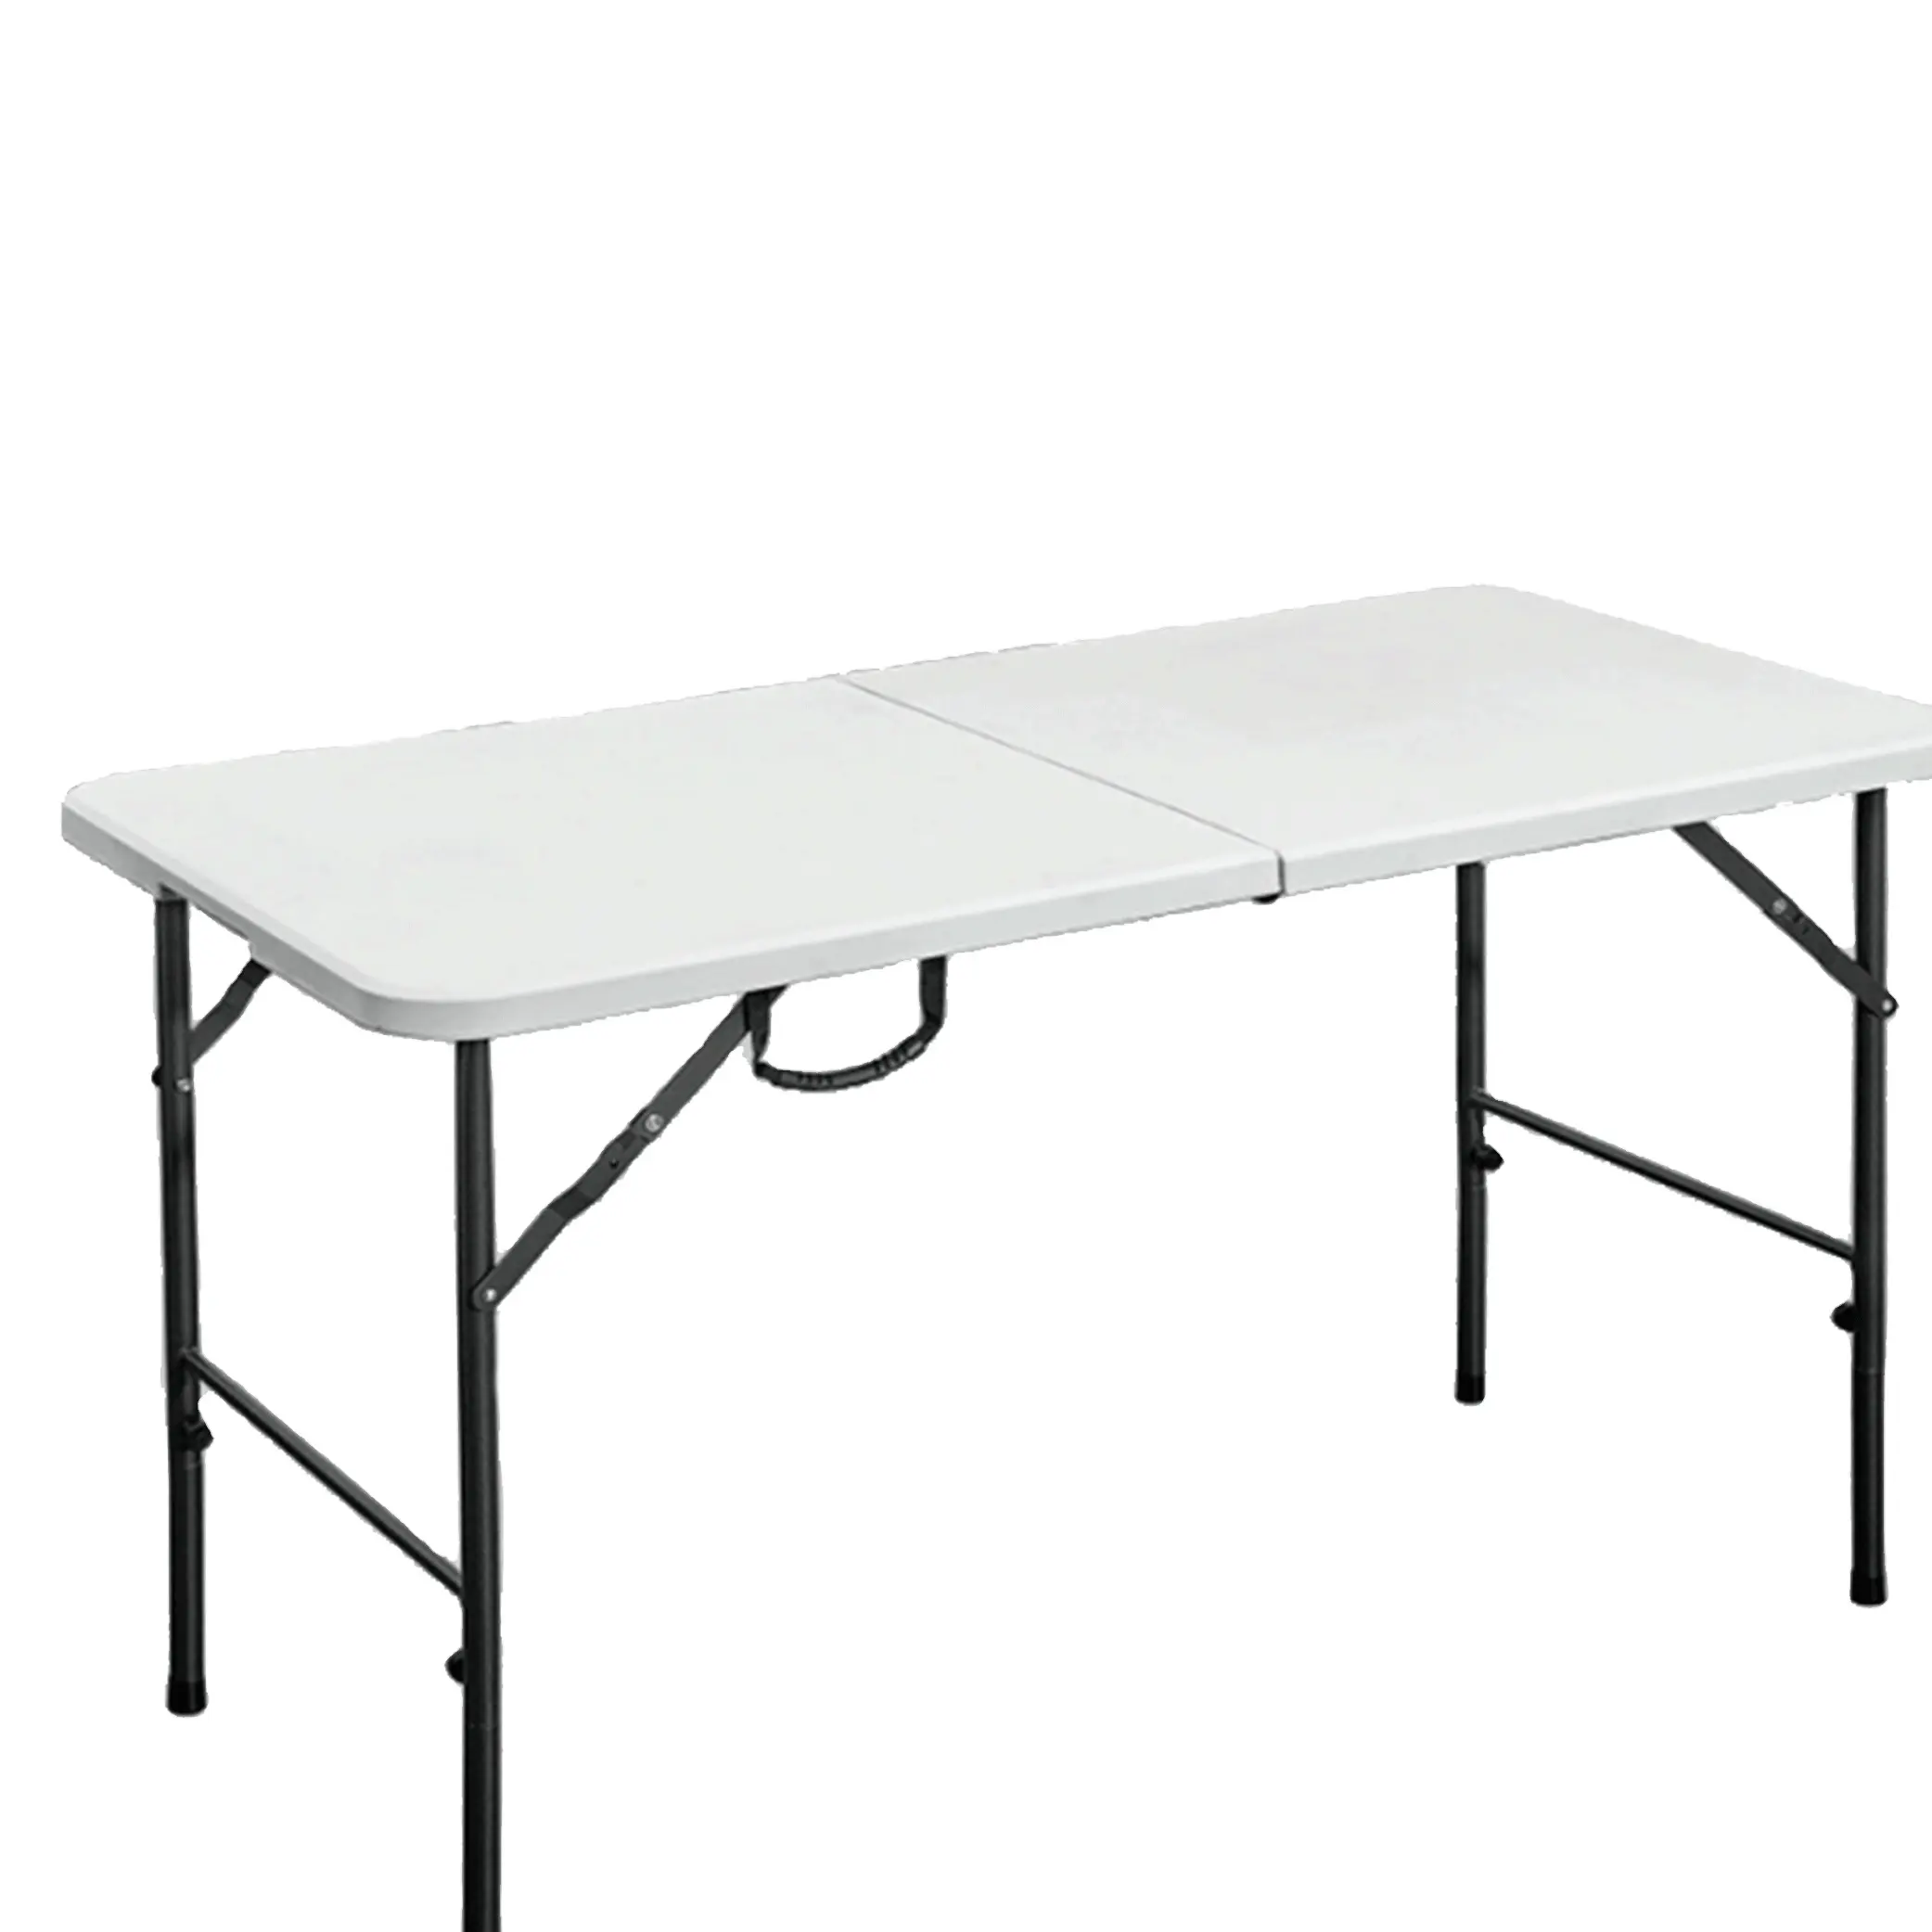 Meja Lipat Cetakan Tiup 4 ", Meja Plastik Lipat Luar Ruangan Lebih Murah dengan Kualitas Tinggi